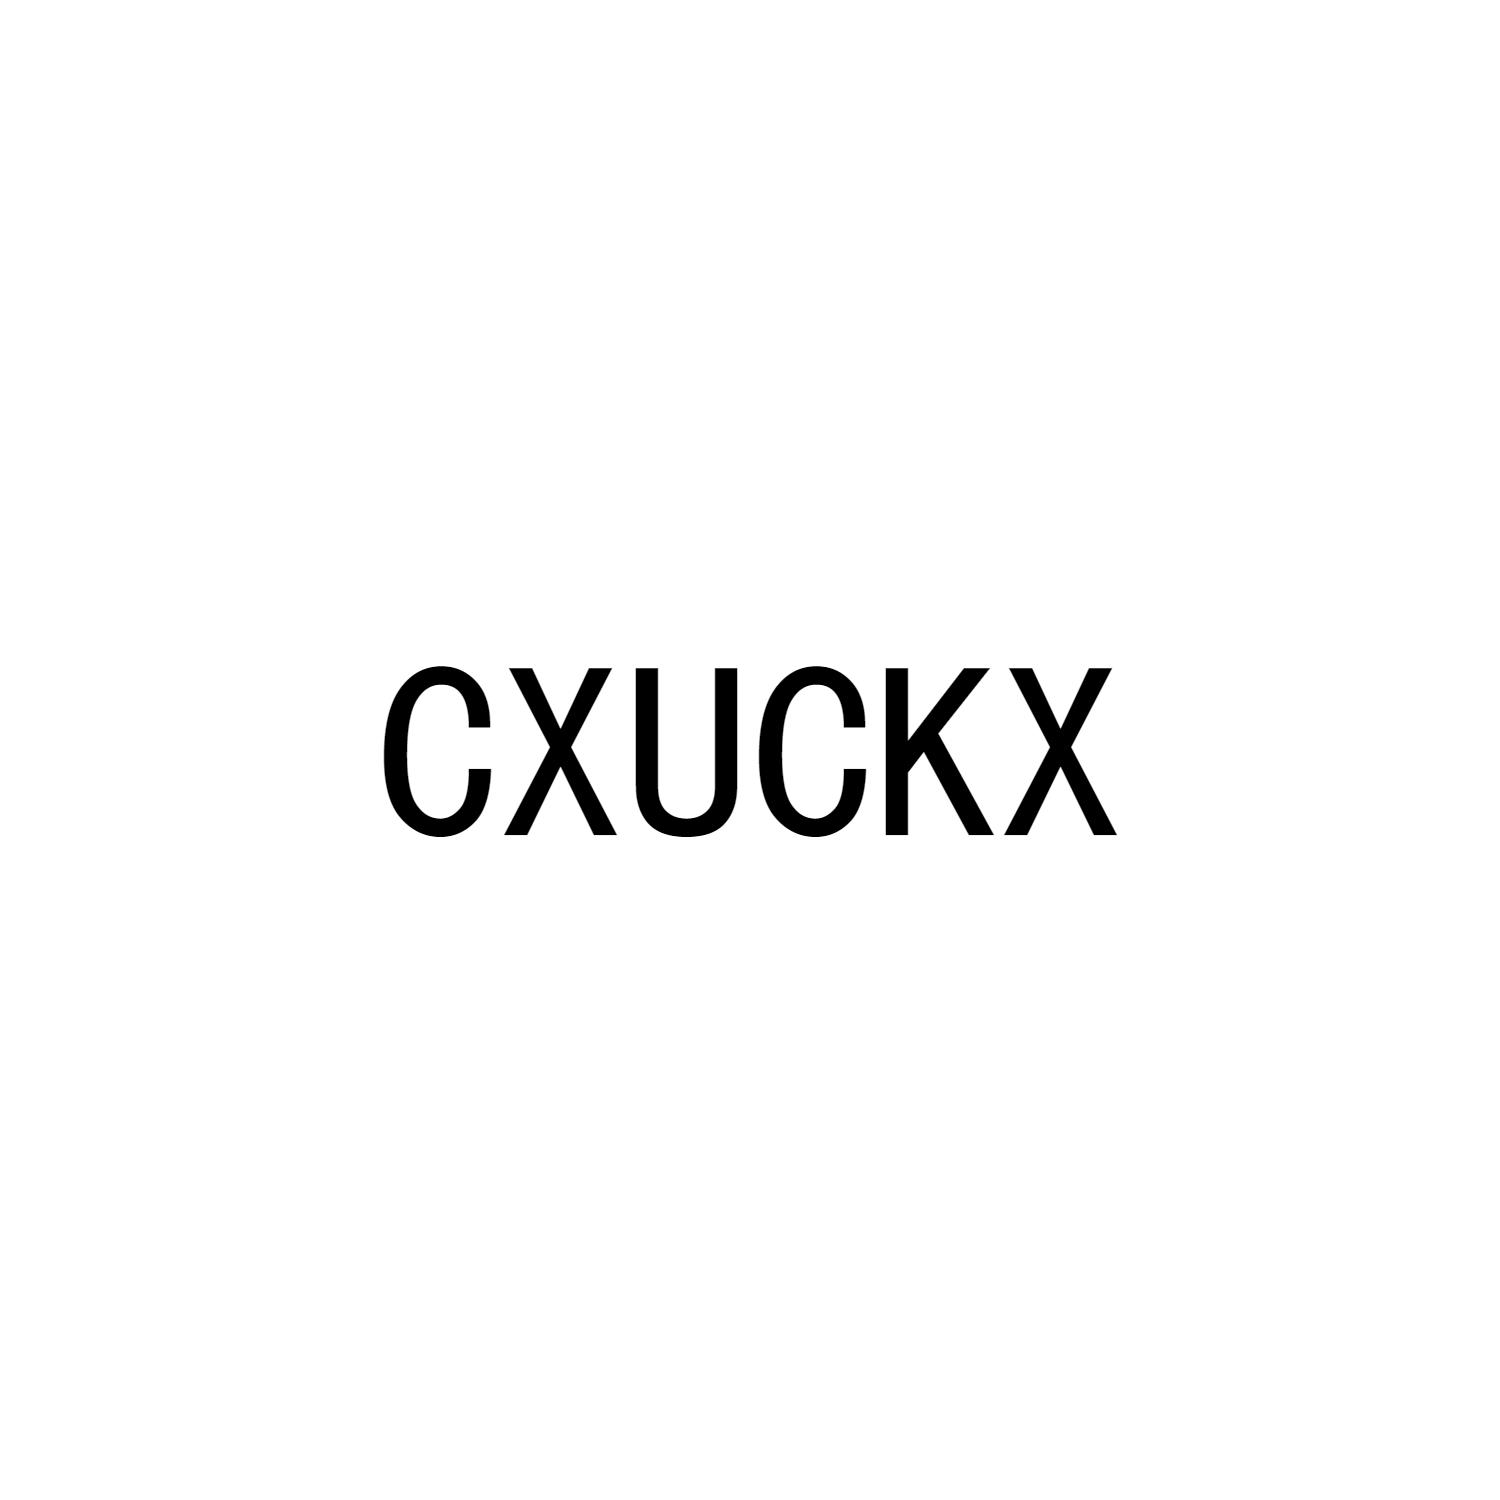 CXUCKX